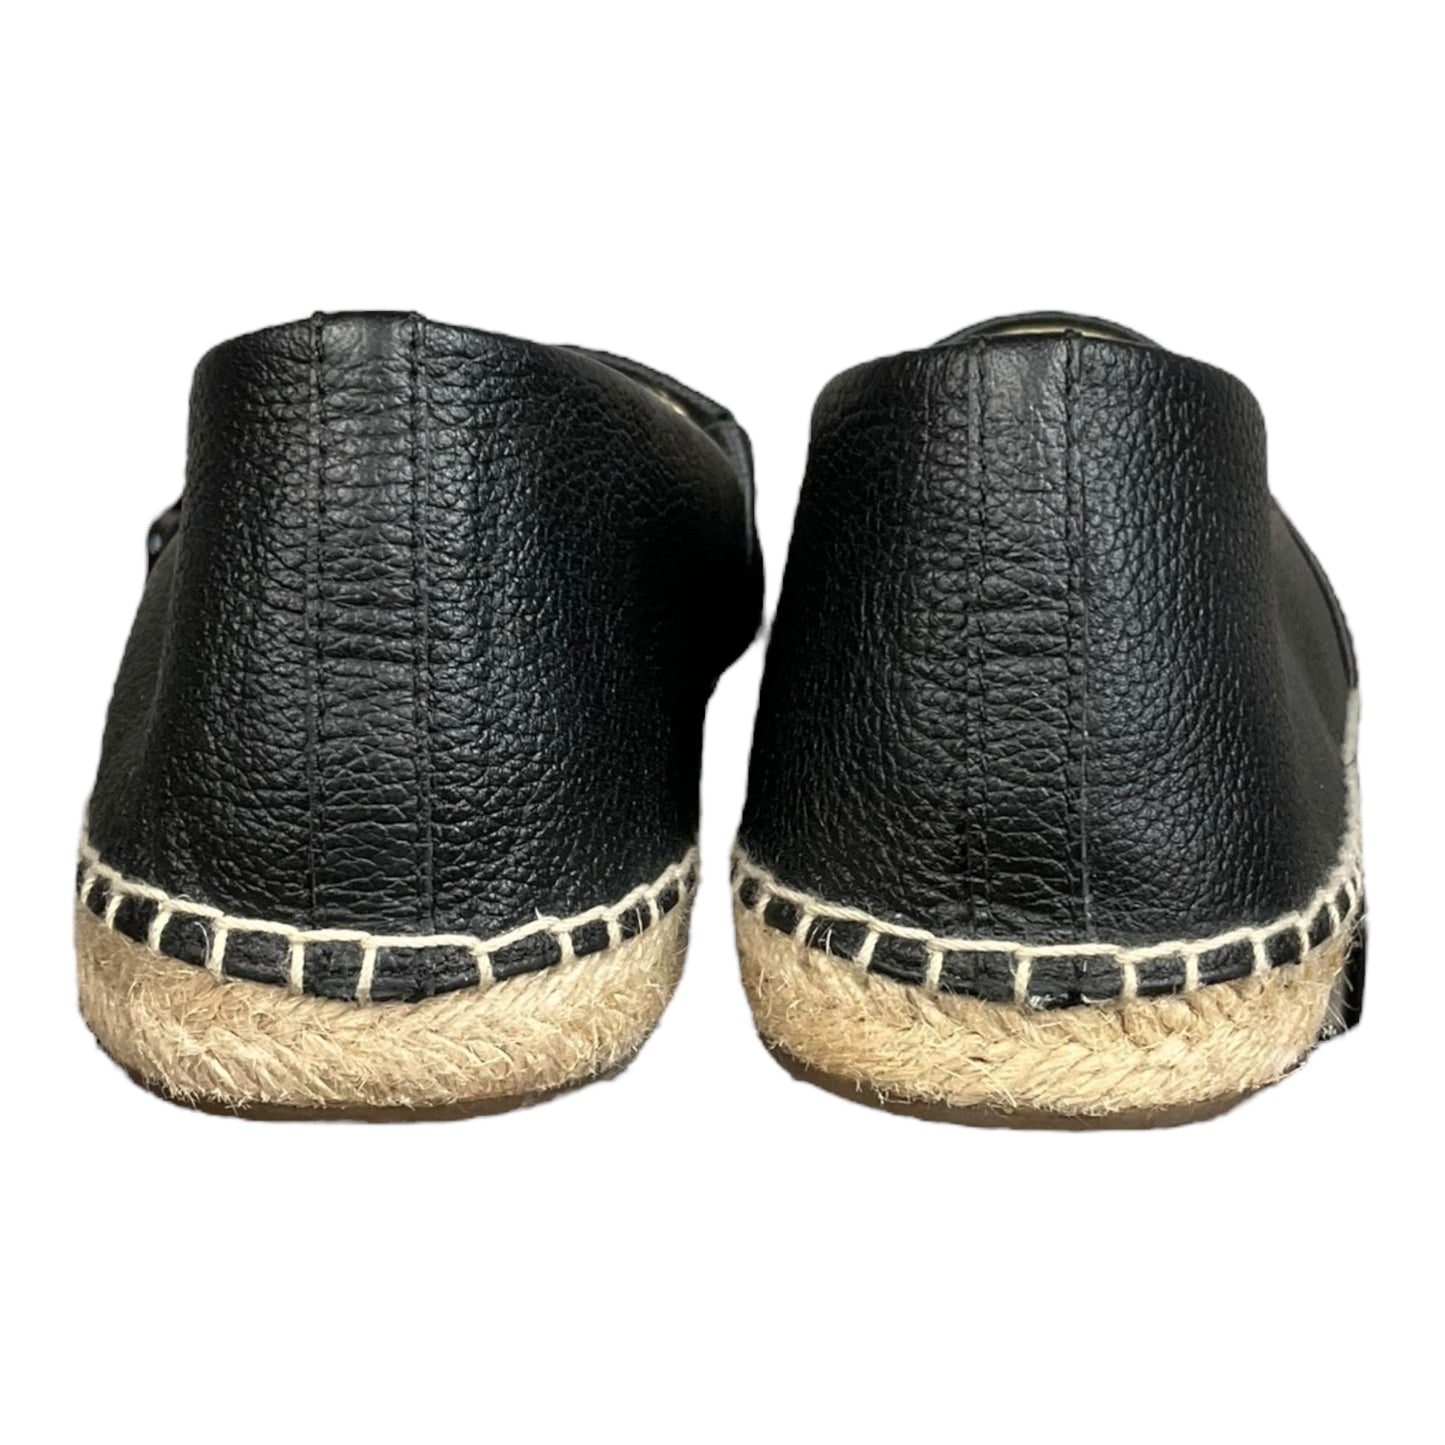 Black Shoes Flats Michael Kors, Size 7.5